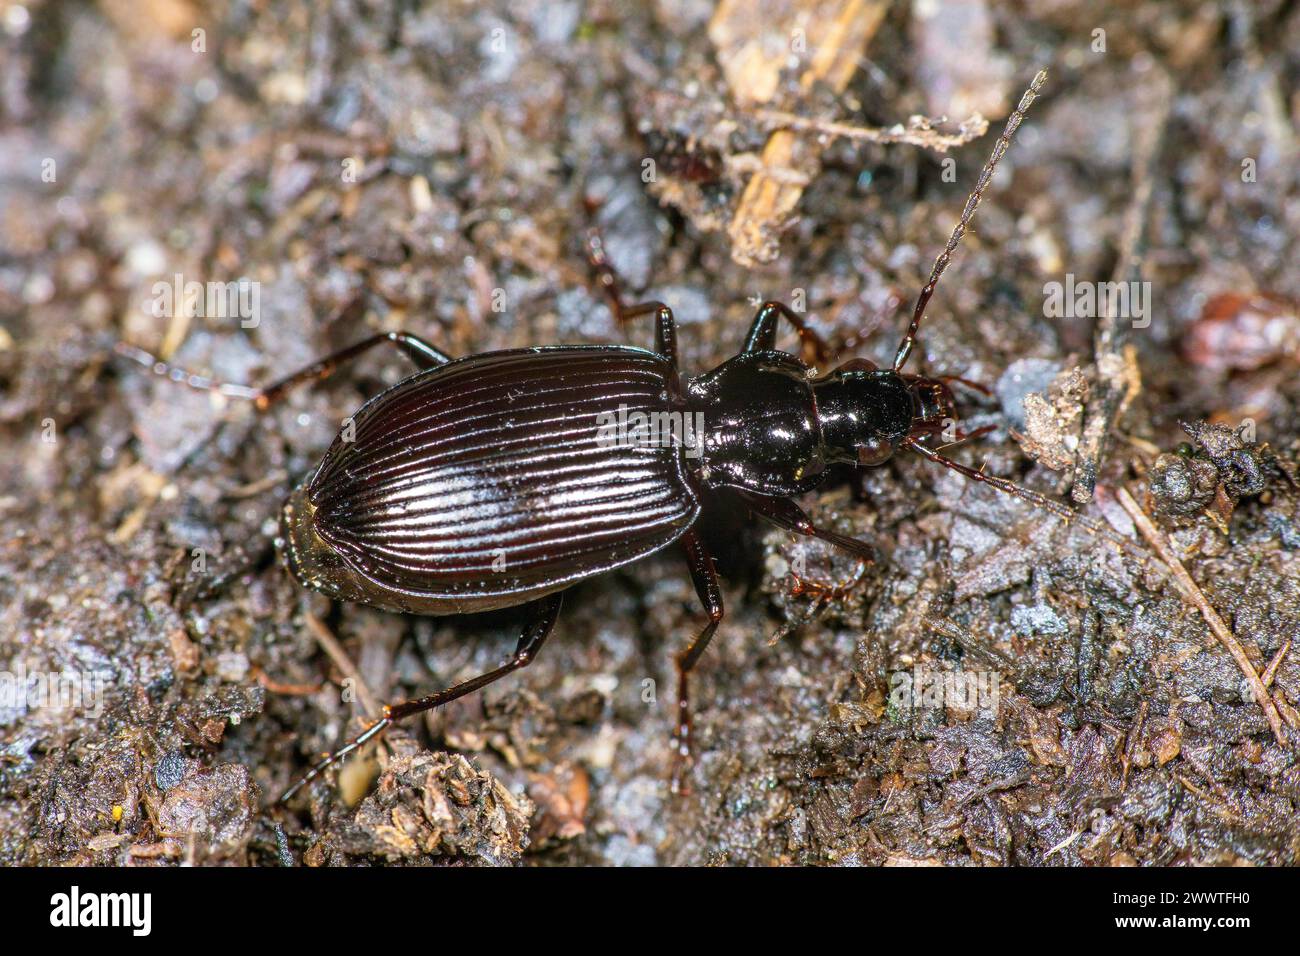 Ground beetle (Limodromus assimilis, Platynus assimilis), top view, Germany Stock Photo